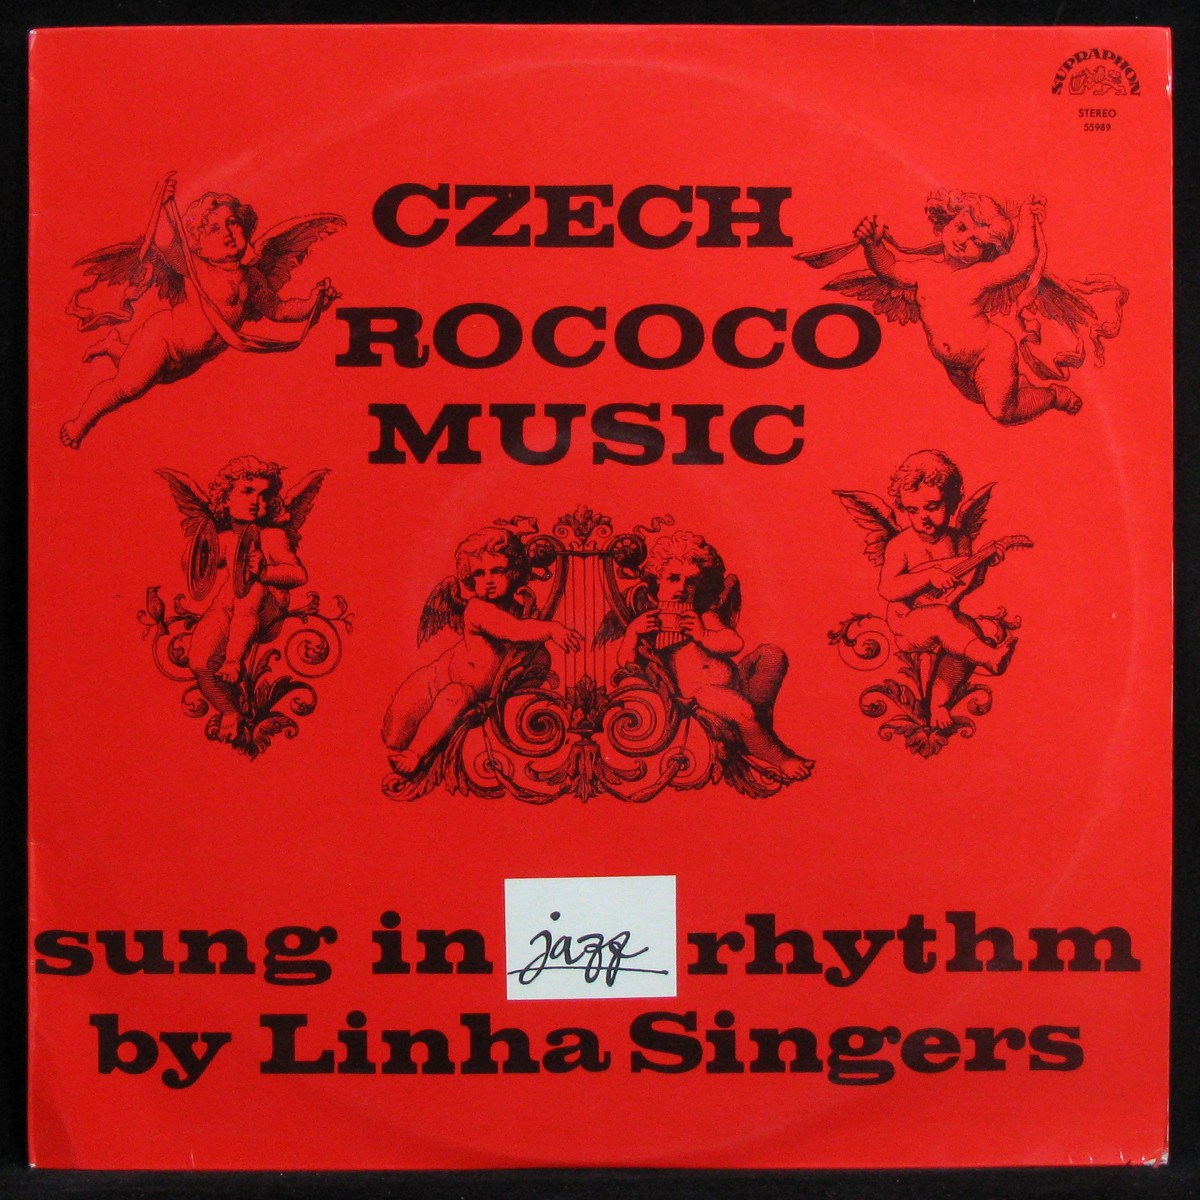 Czech Rococo Music (Sung In Jazz Rhythm)